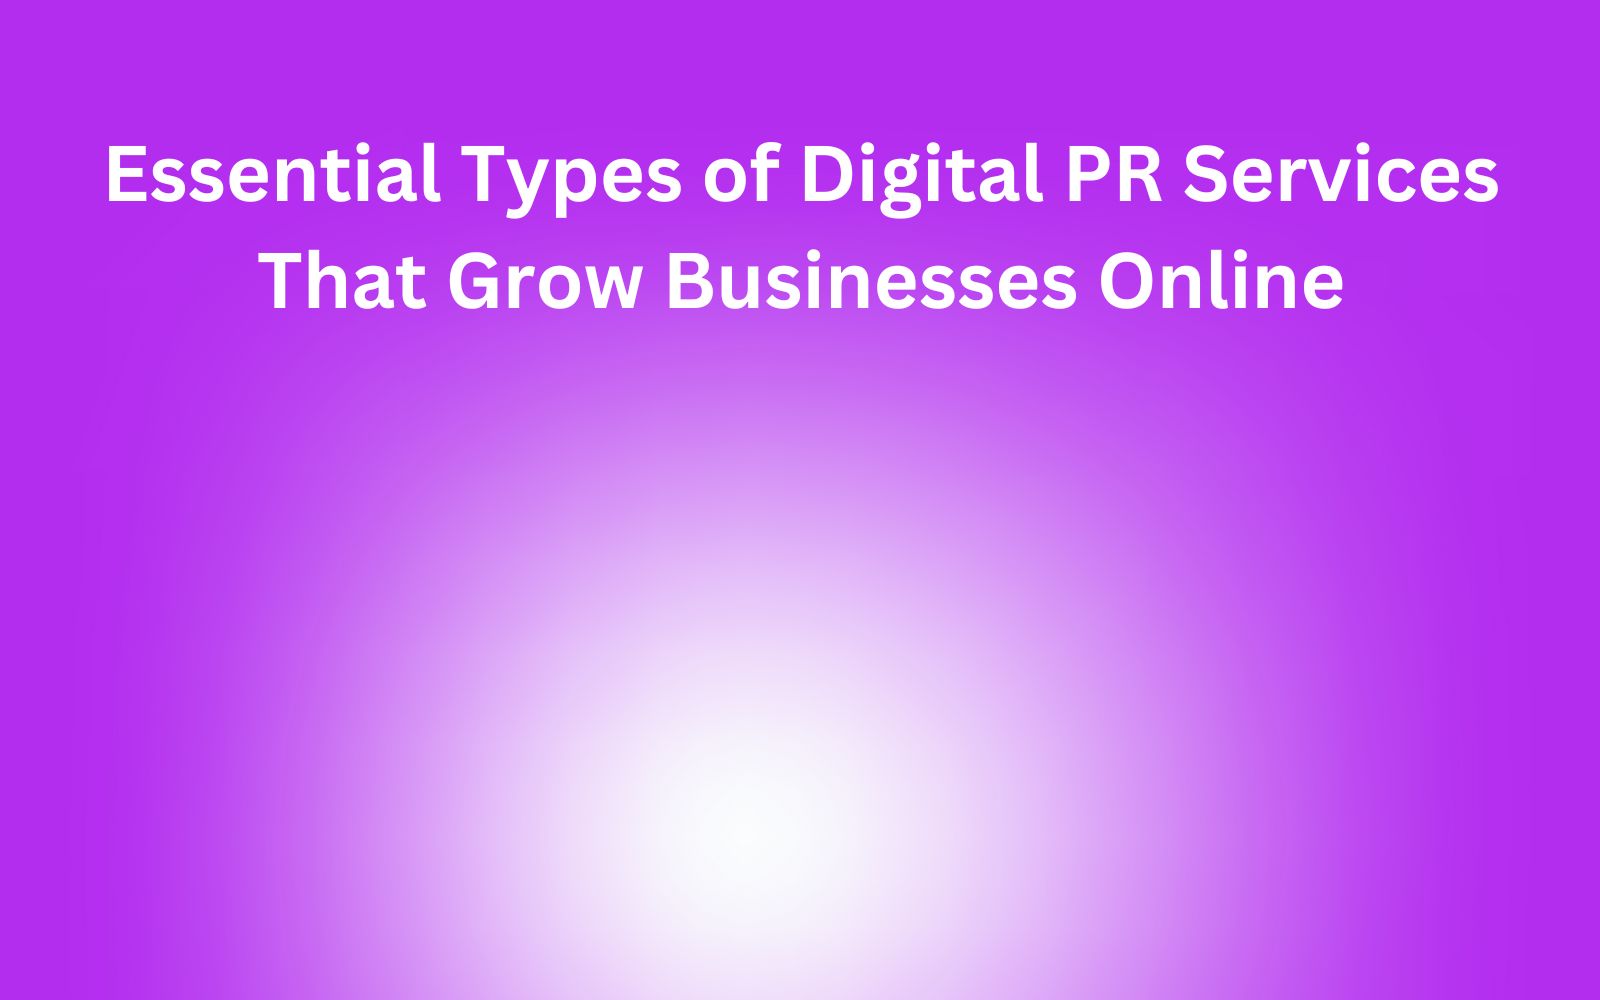 Digital PR Services